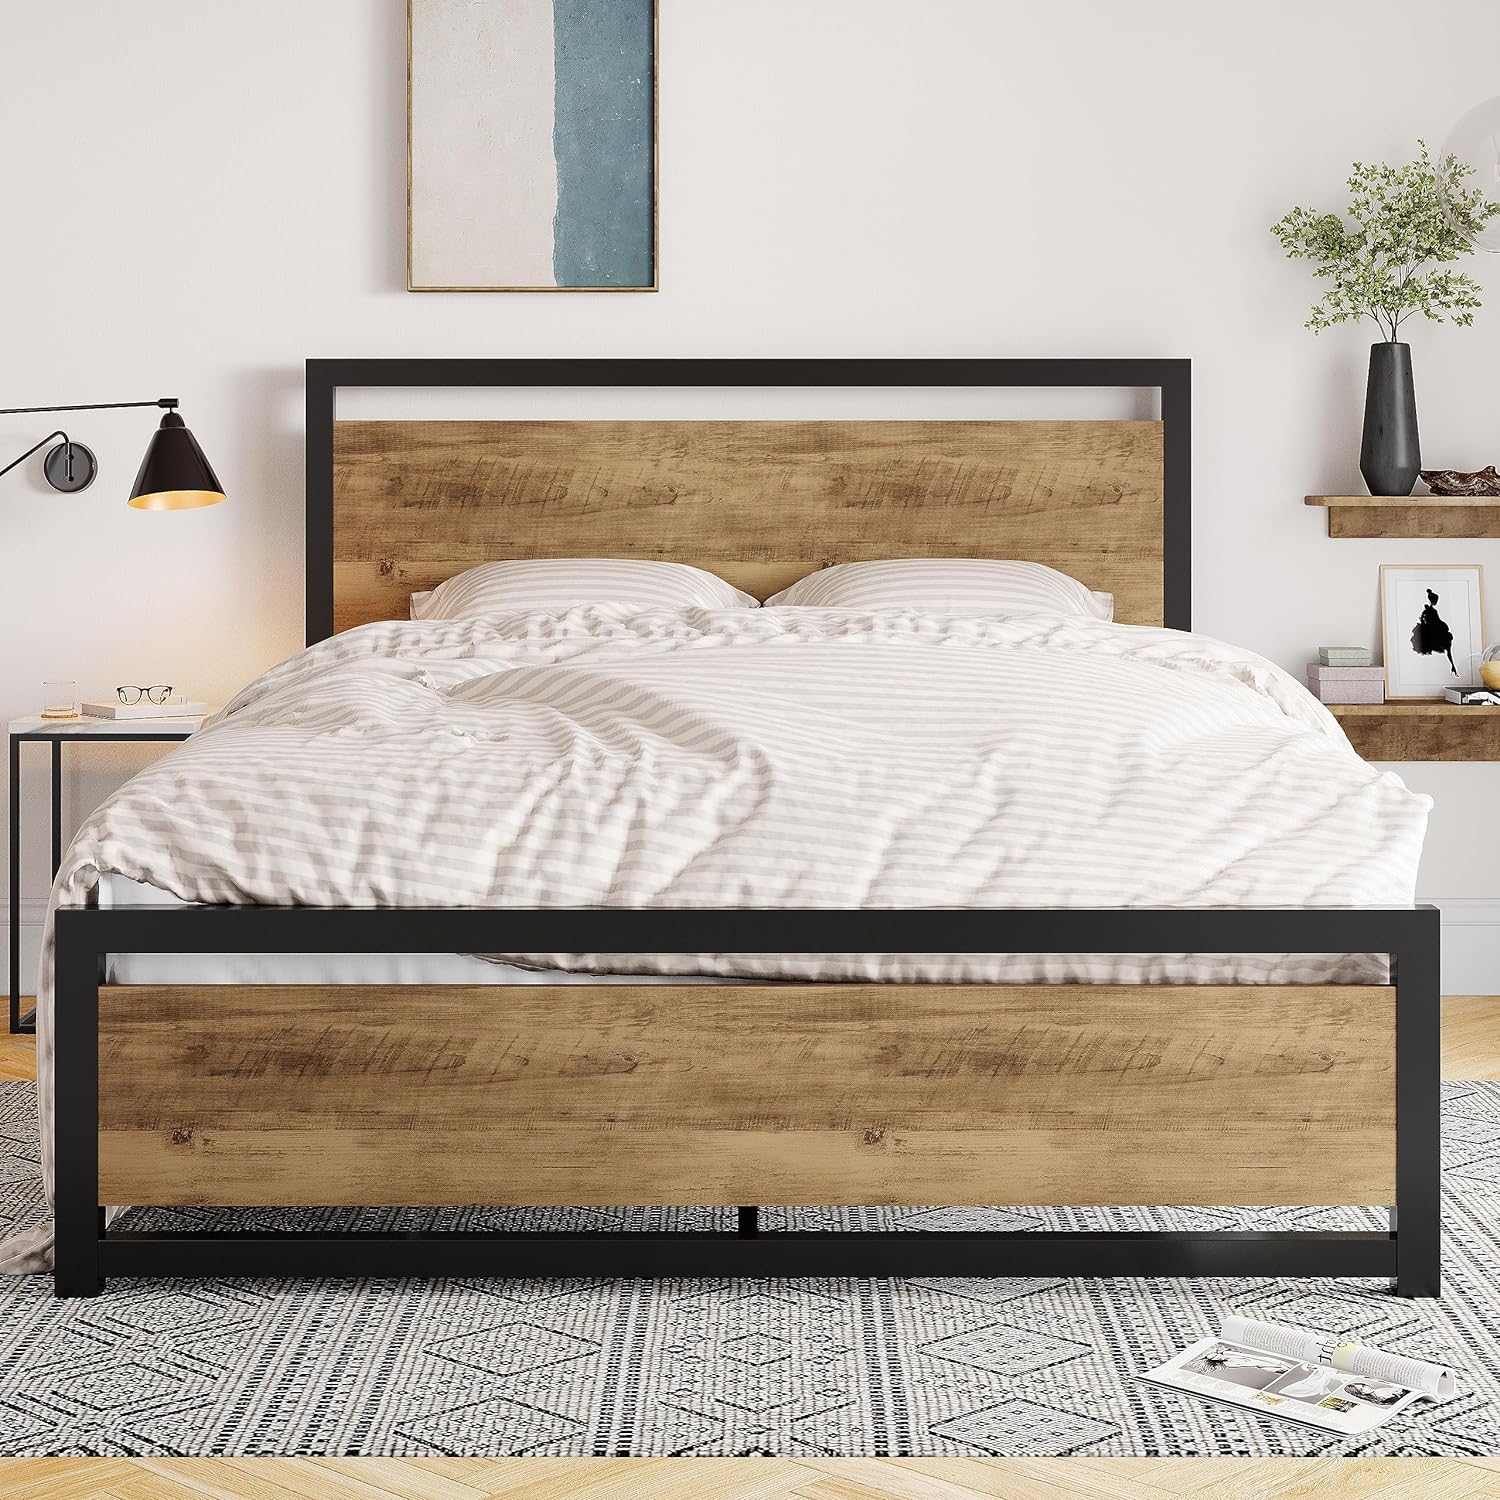 California King Bed: Redefining Comfort in the Bedroom插图